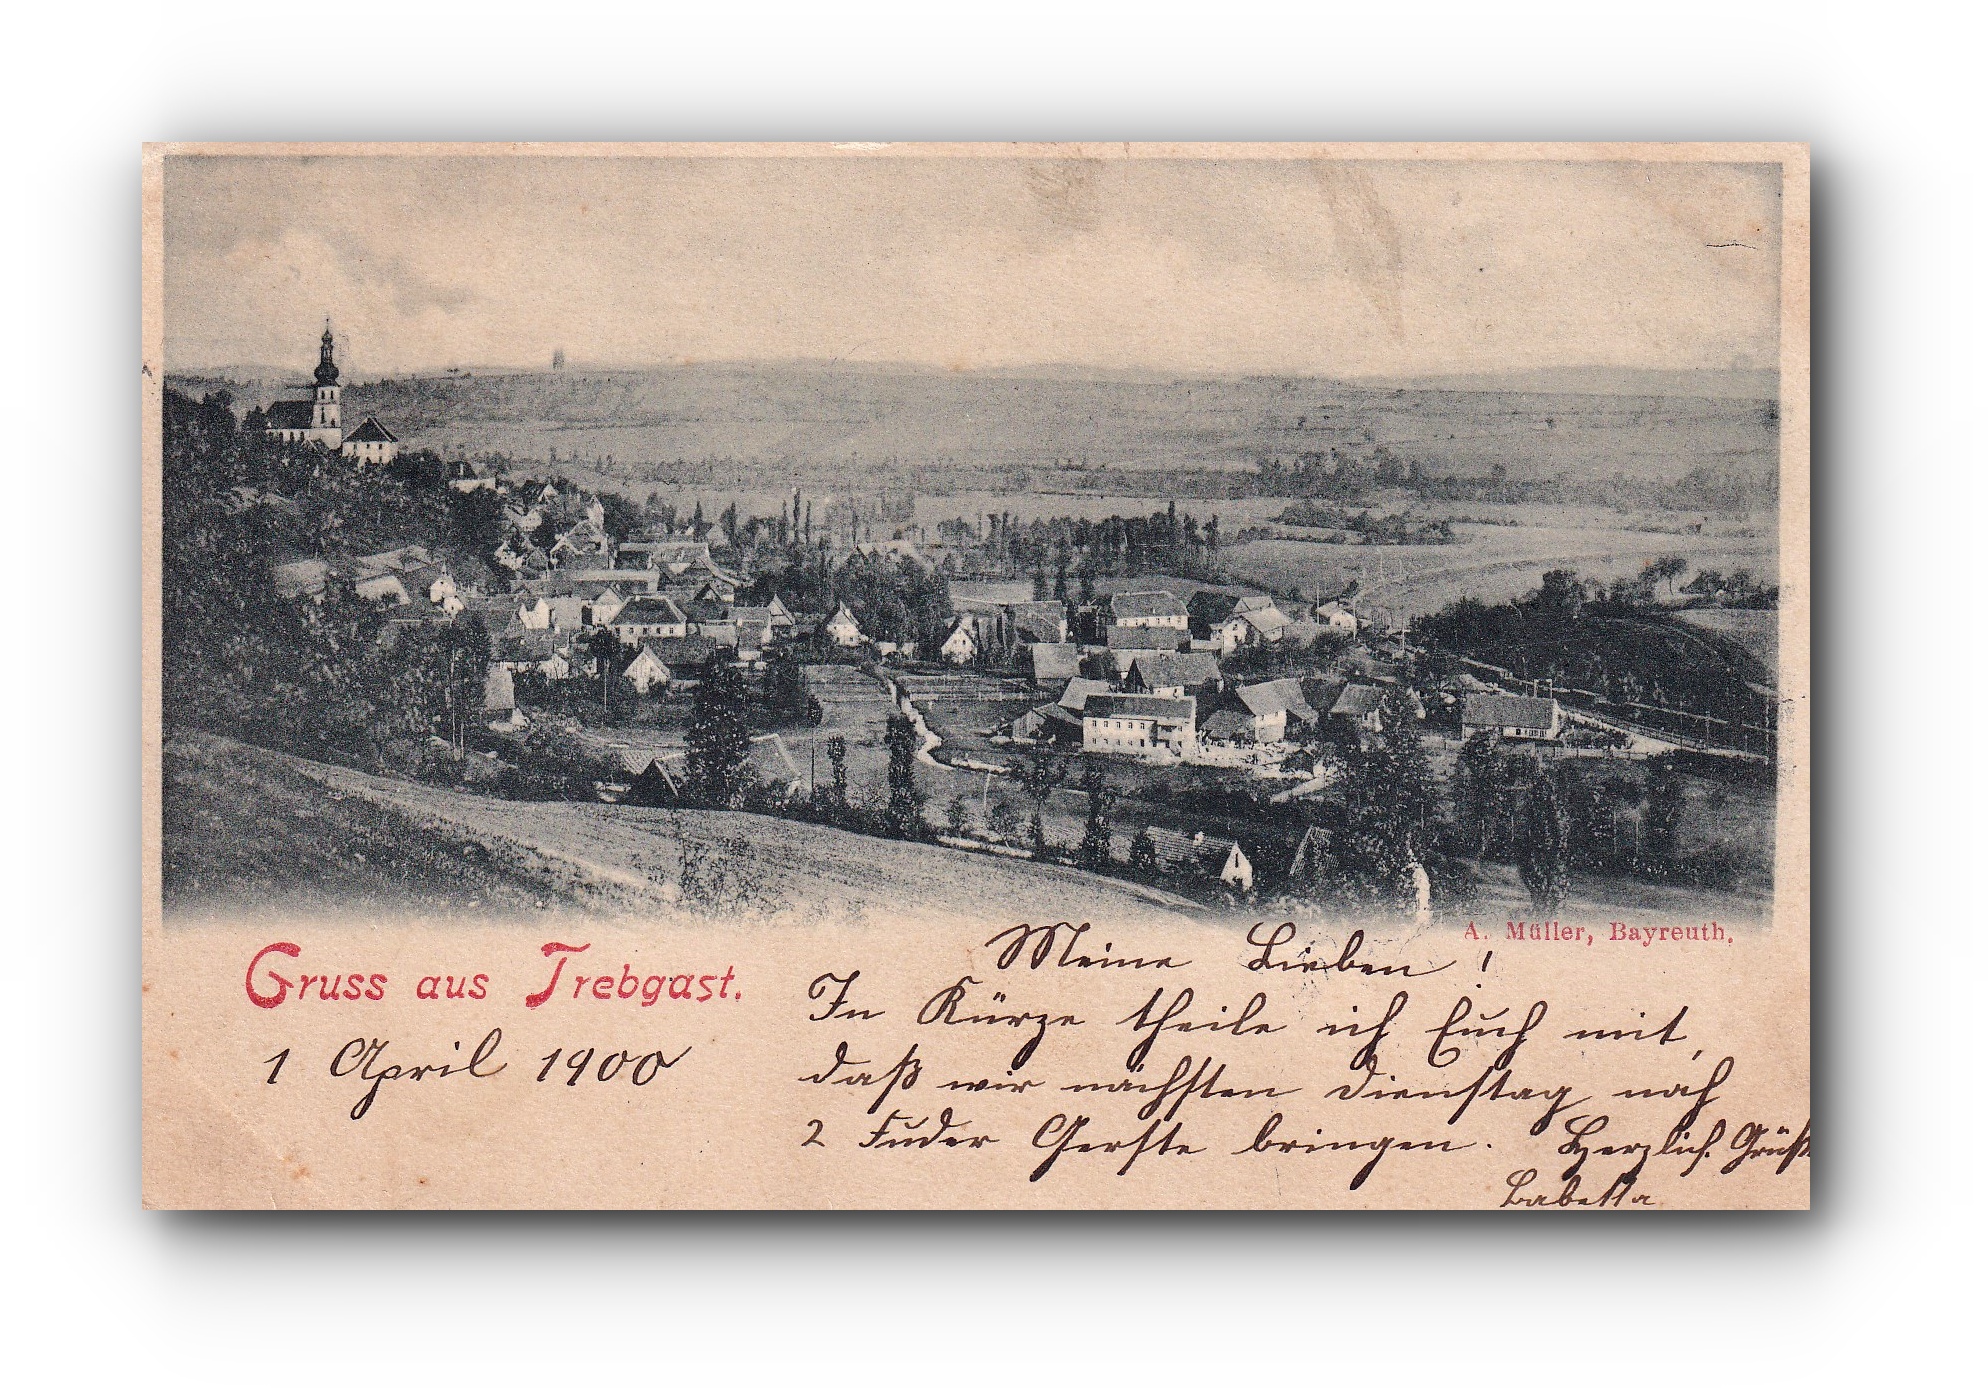 Gruss aus Trebgast - 01.04.1900 - Salutations de Trebgast - Greetings from Trebgast